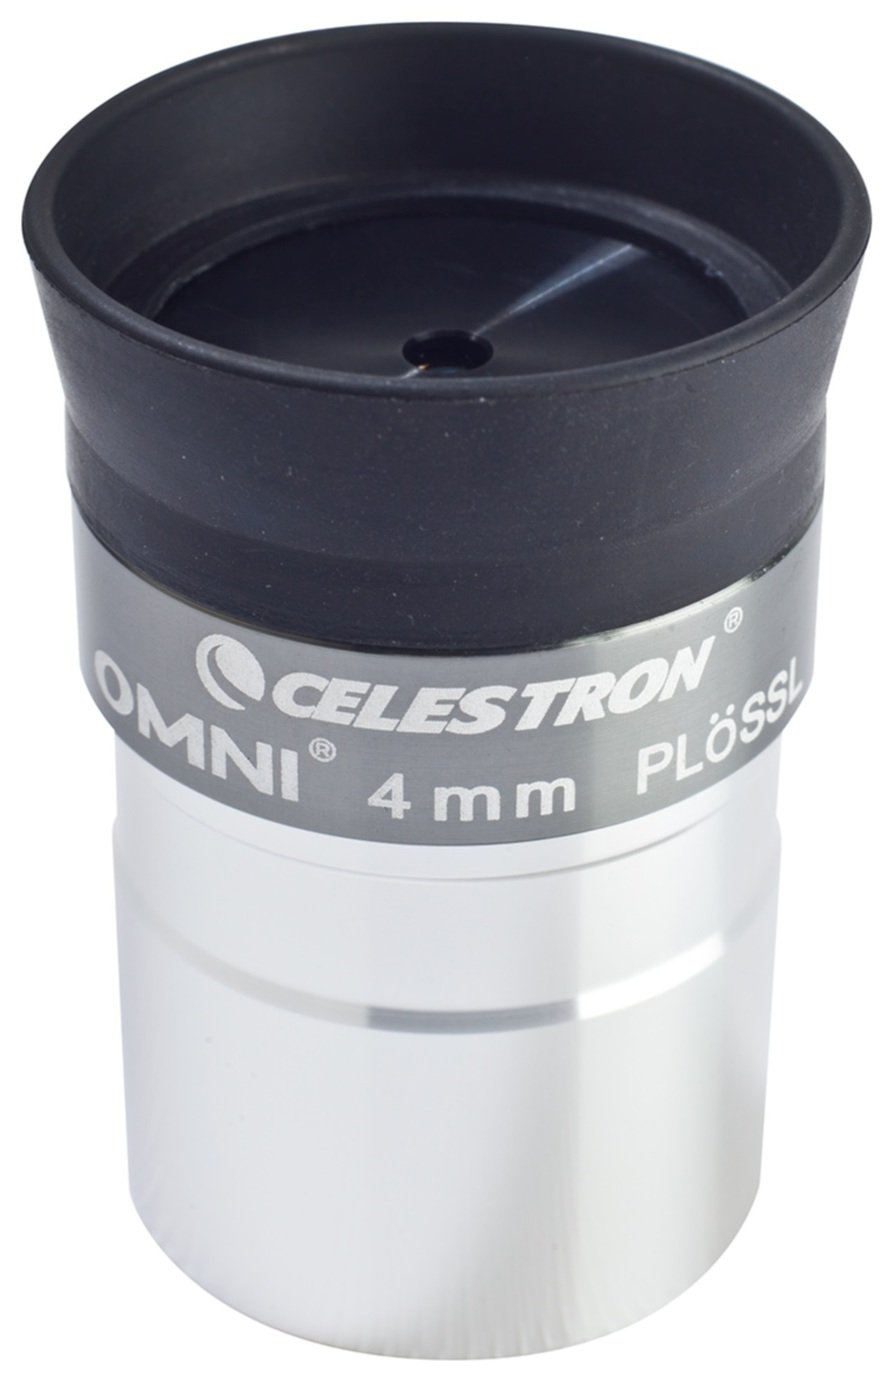 Celestron Omni Telescope Eyepiece 4mm